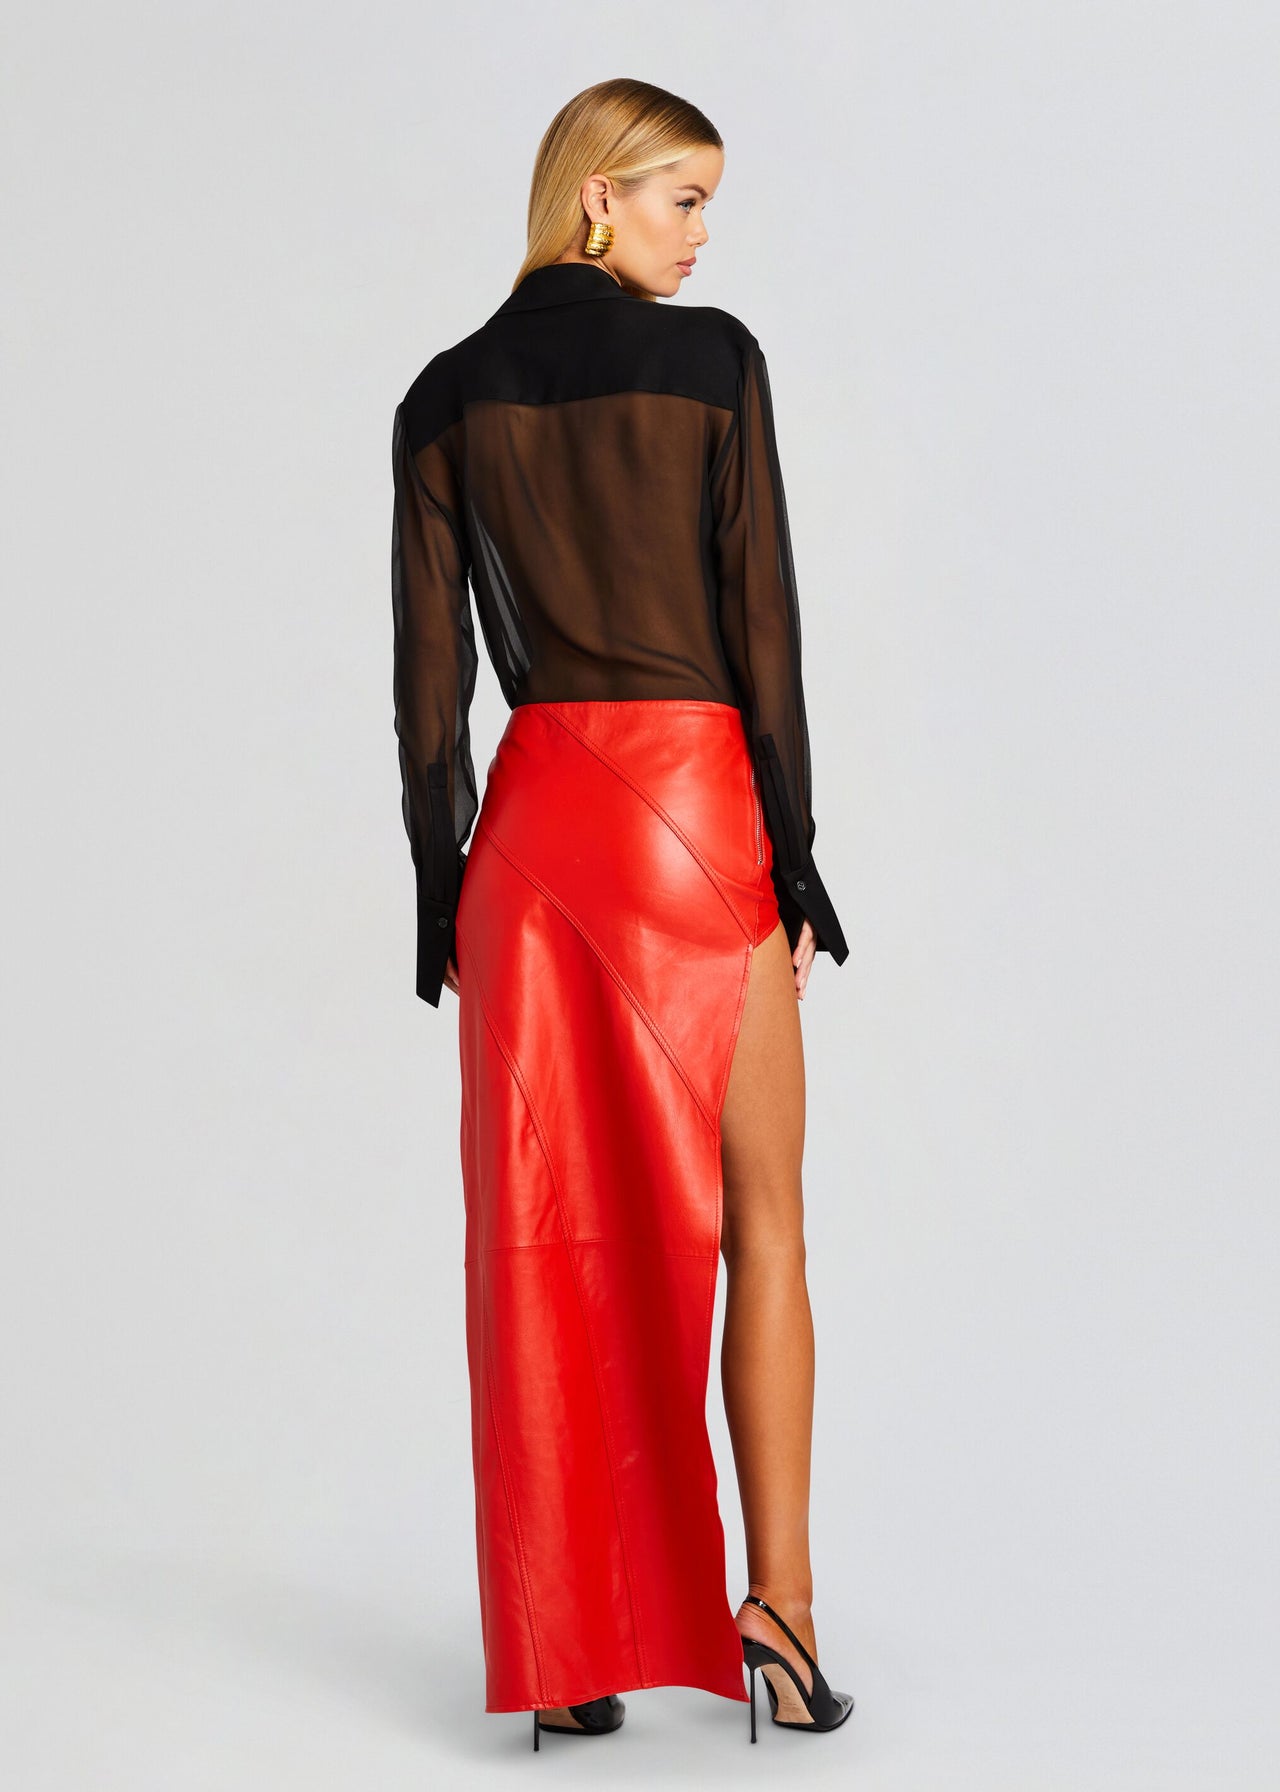 Tash Leather Skirt